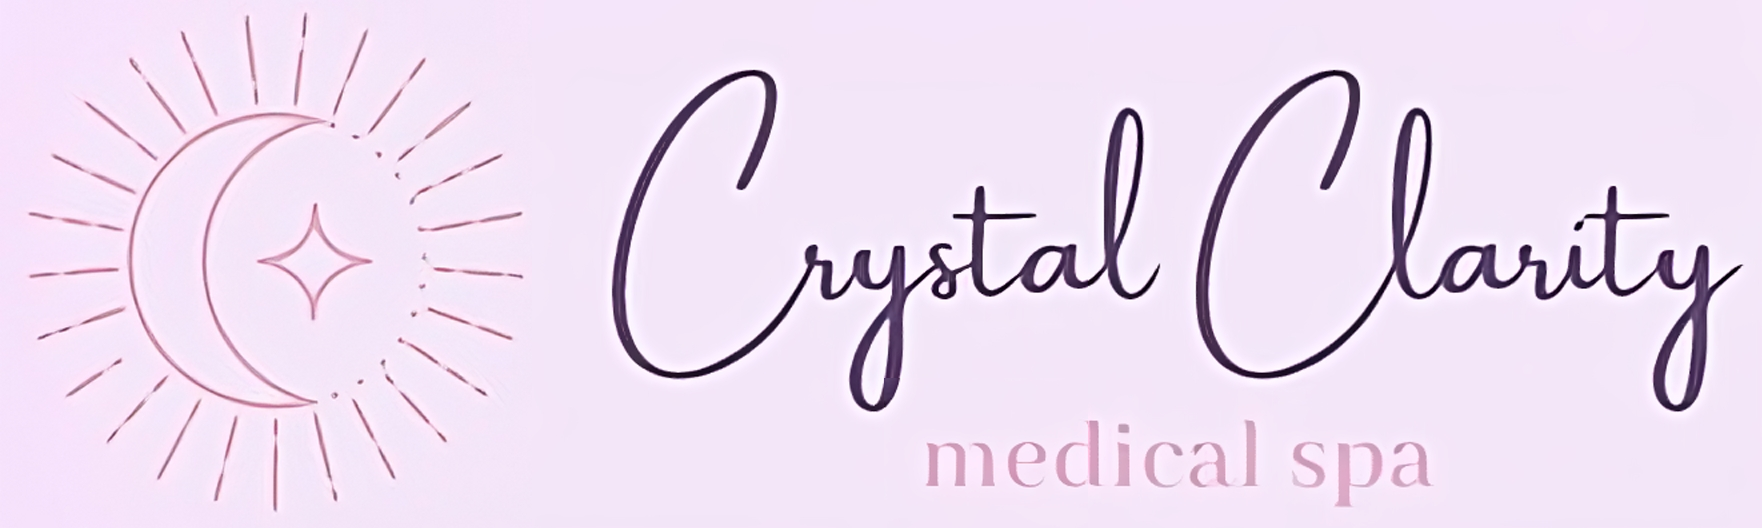 Crystal Clarity Medical Spa